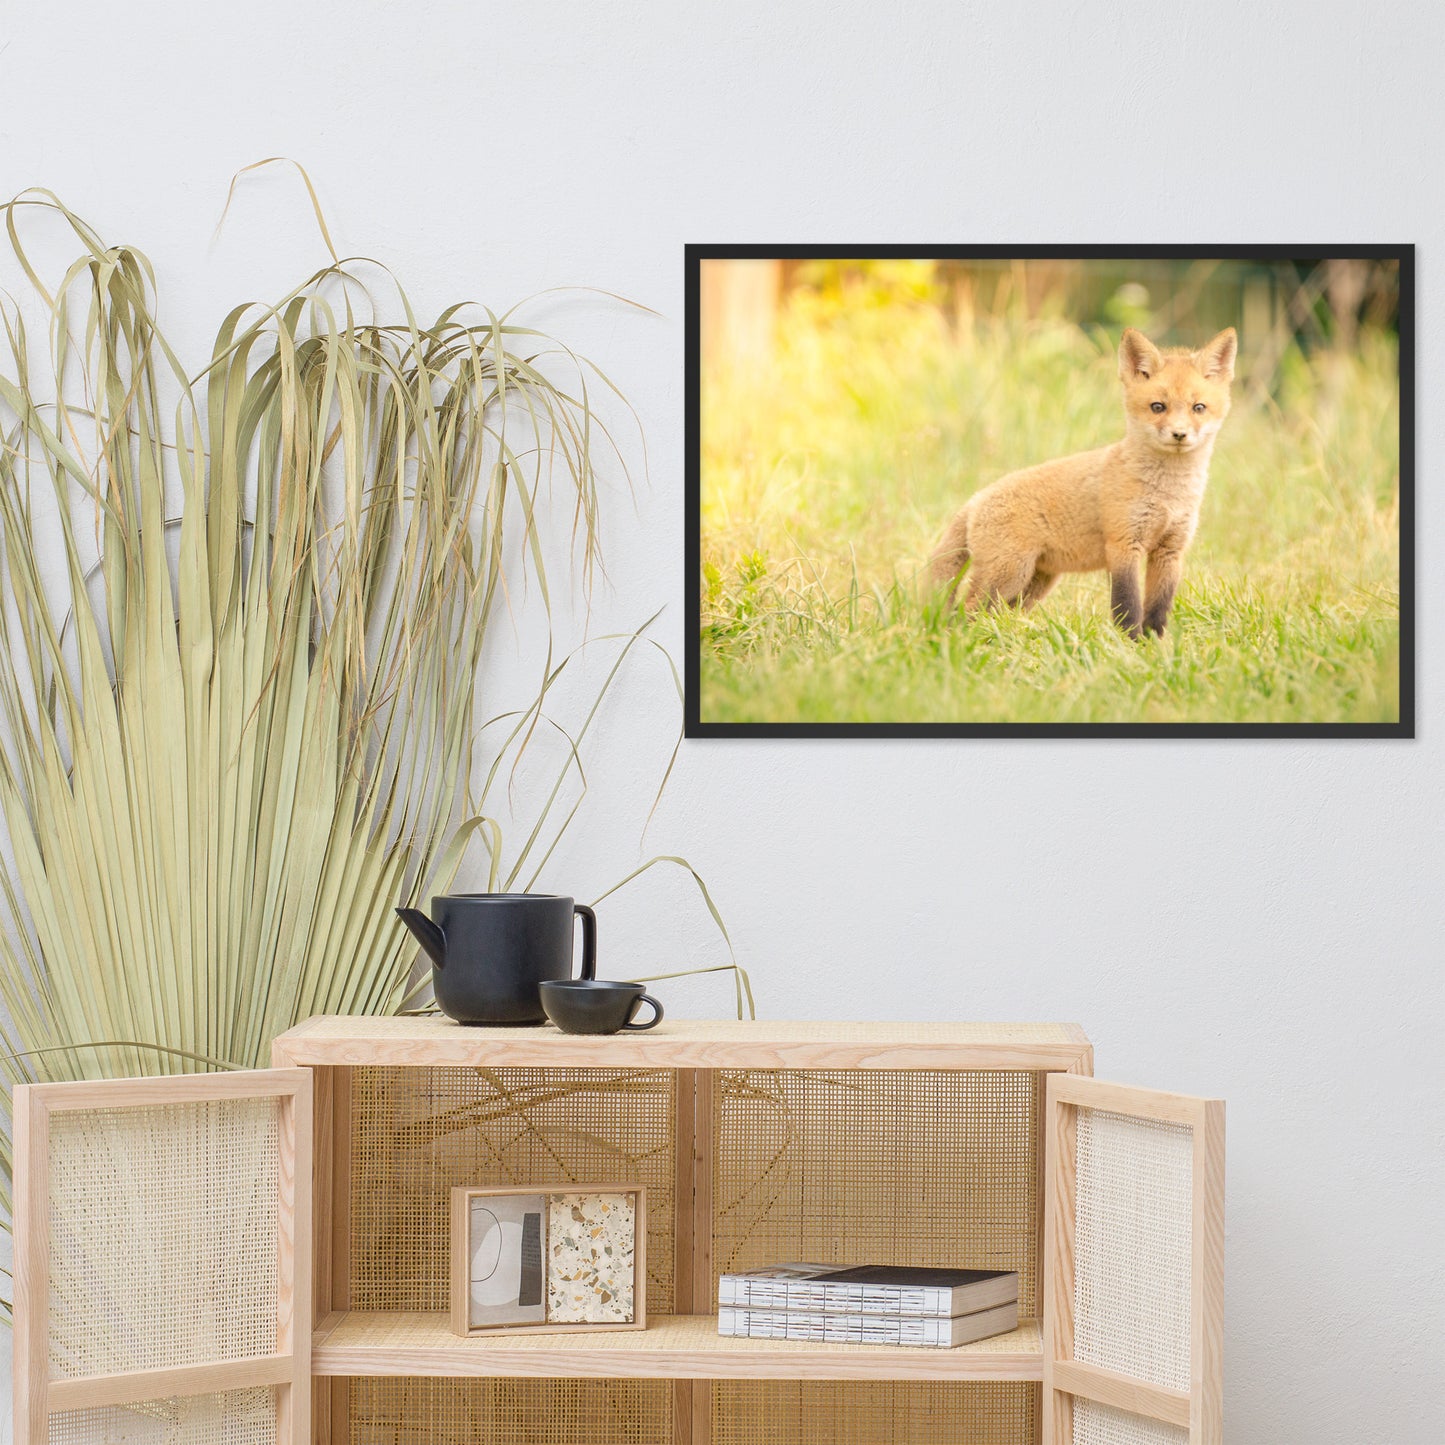 Nursery Art Framed: Baby Red Fox in the Sun - Animal / Wildlife / Nature Artwork - Wall Decor - Framed Wall Art Print